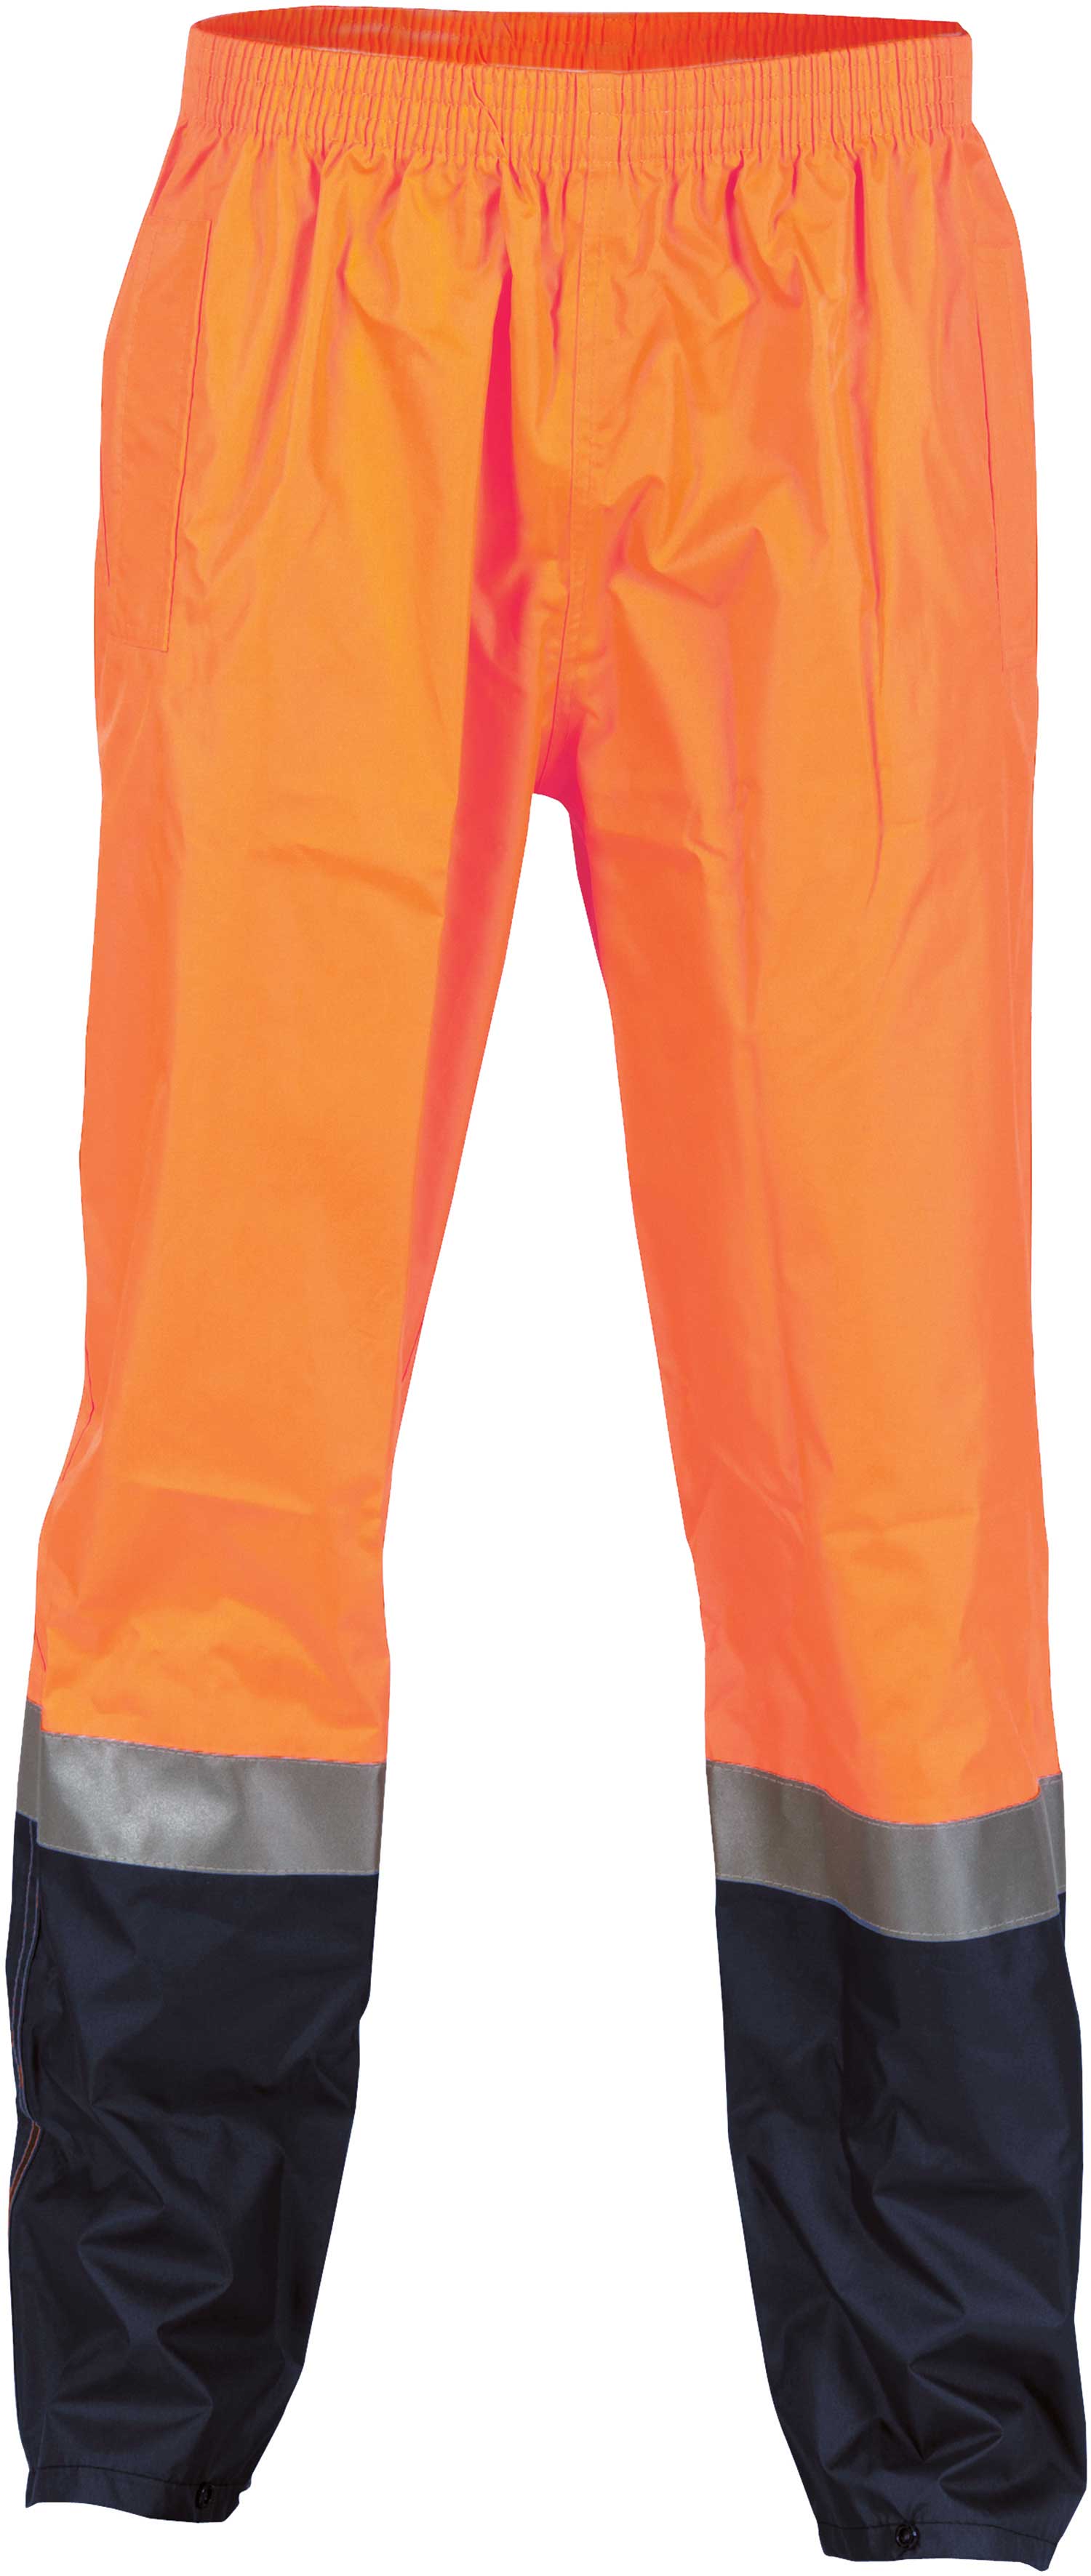 Rain Wear Pants Hi-Vis Lightweight Orange